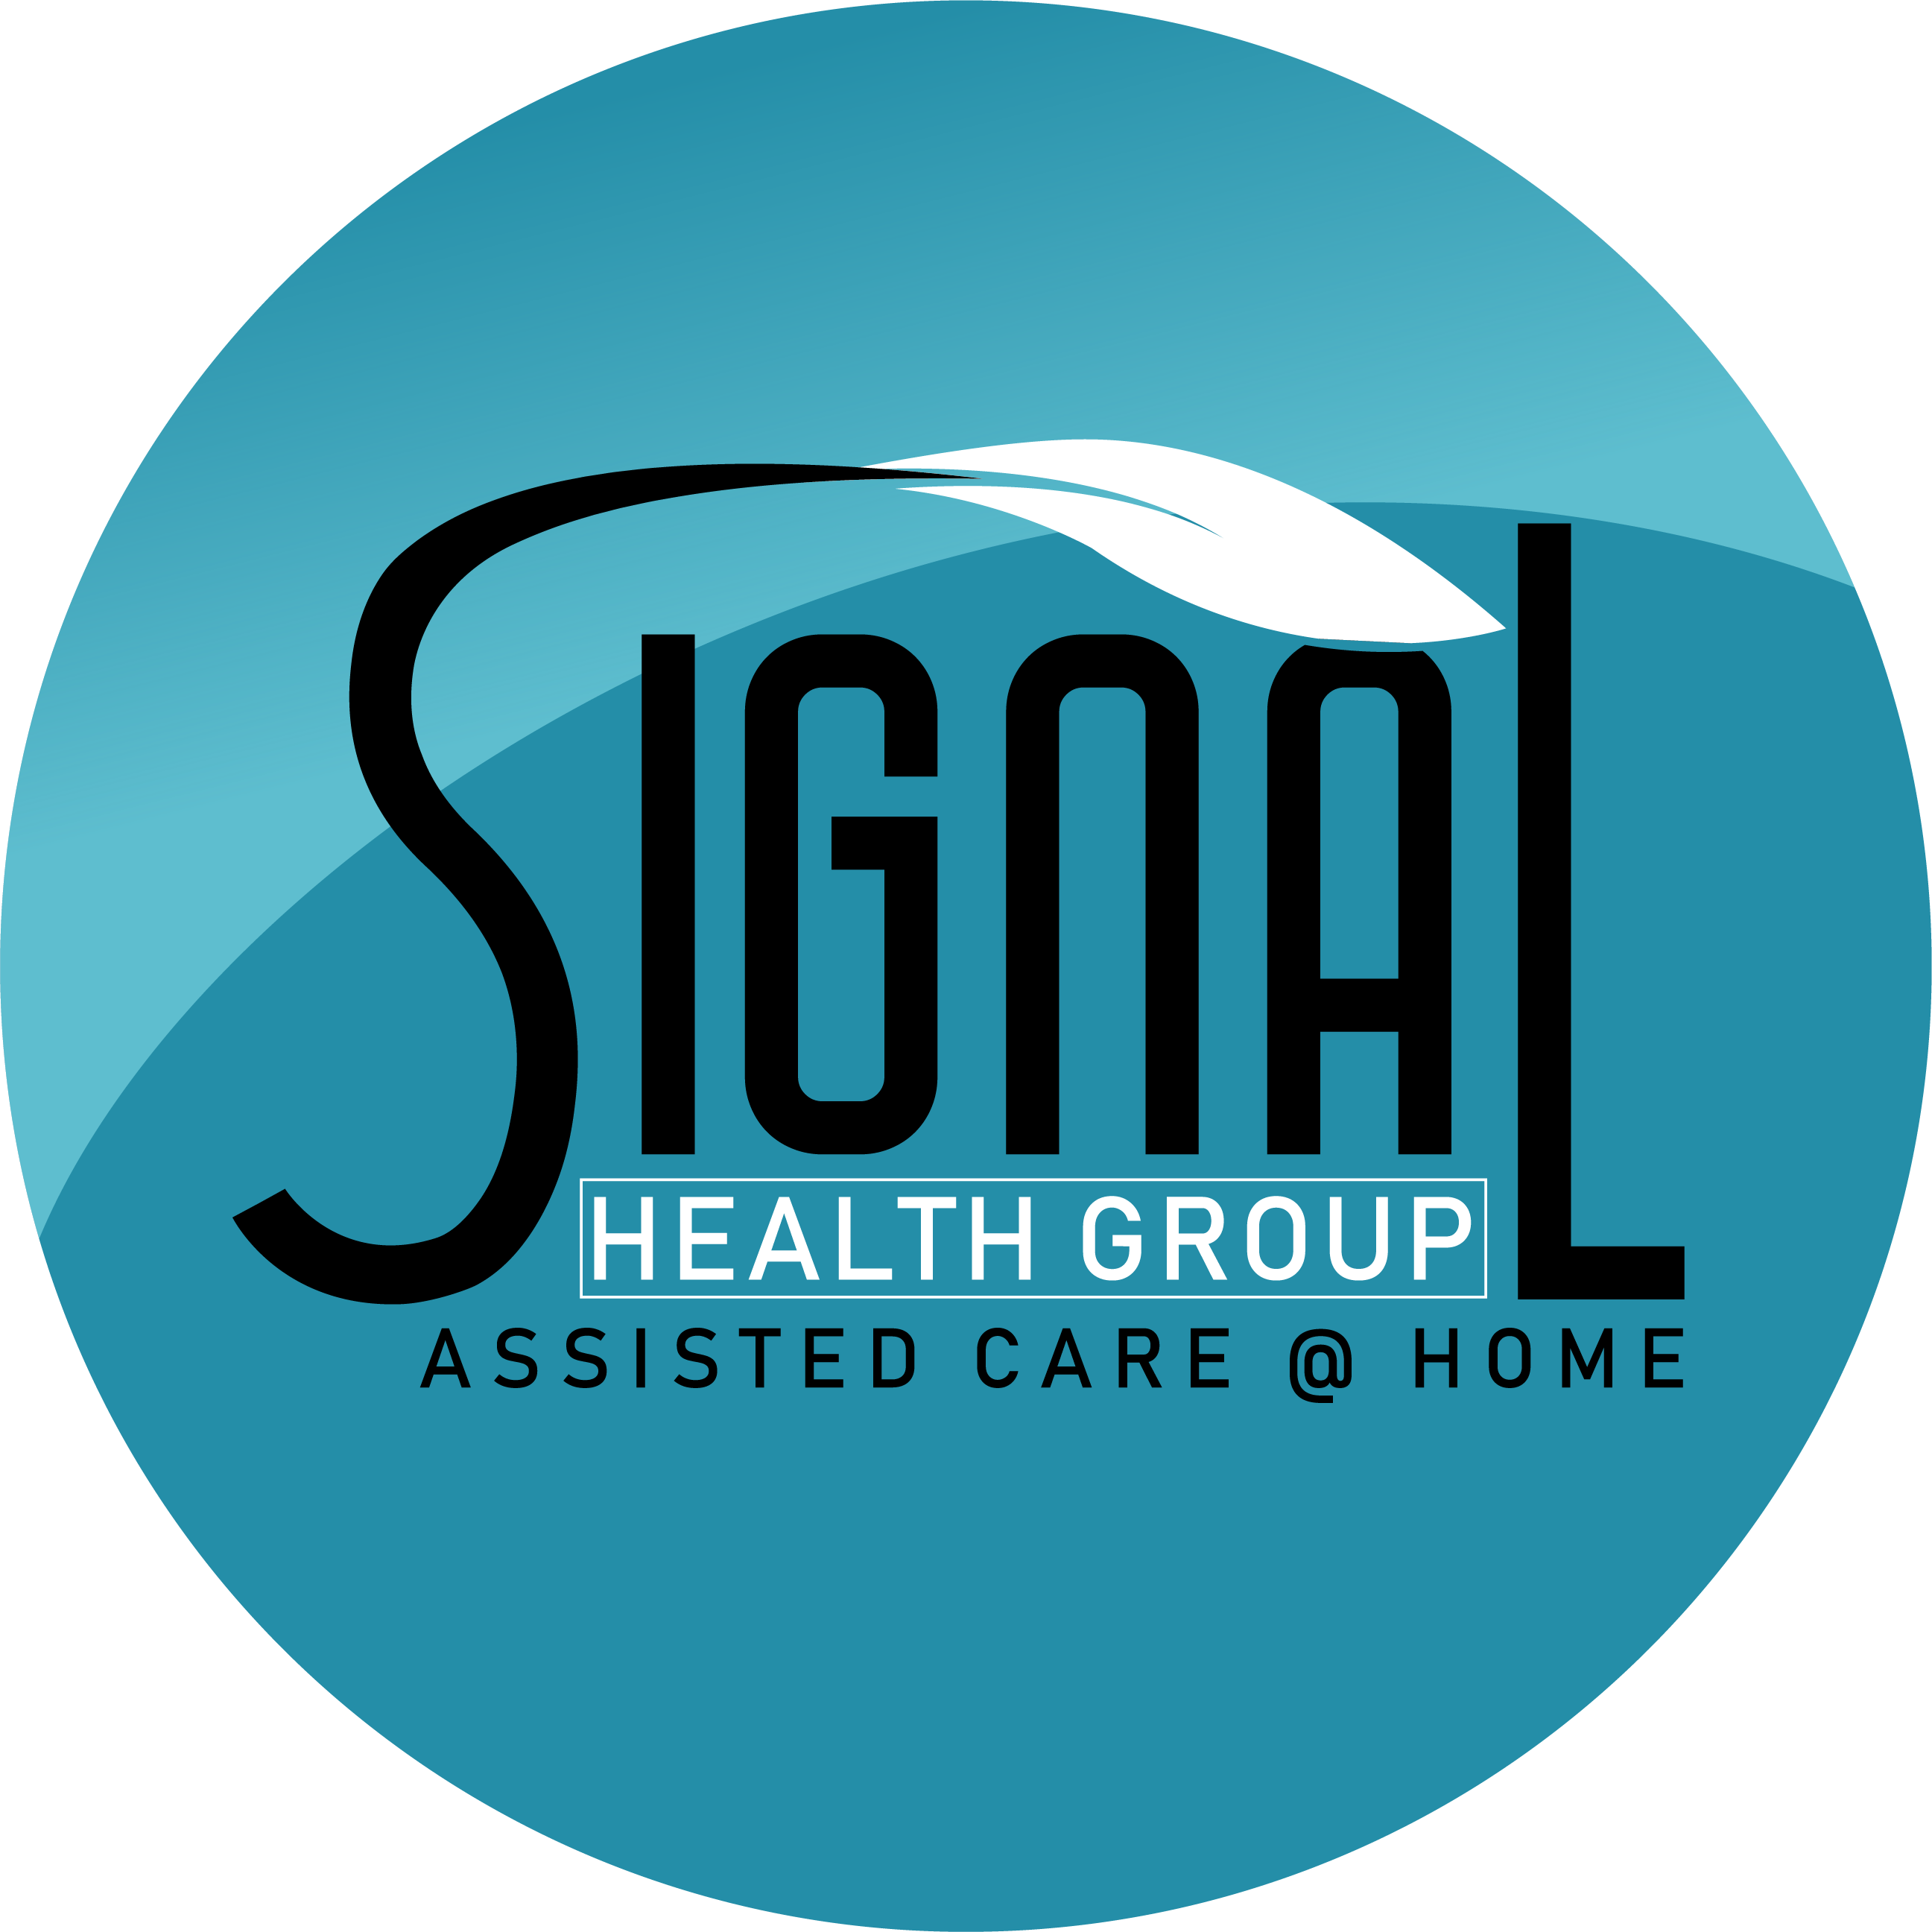 Signal Health Group